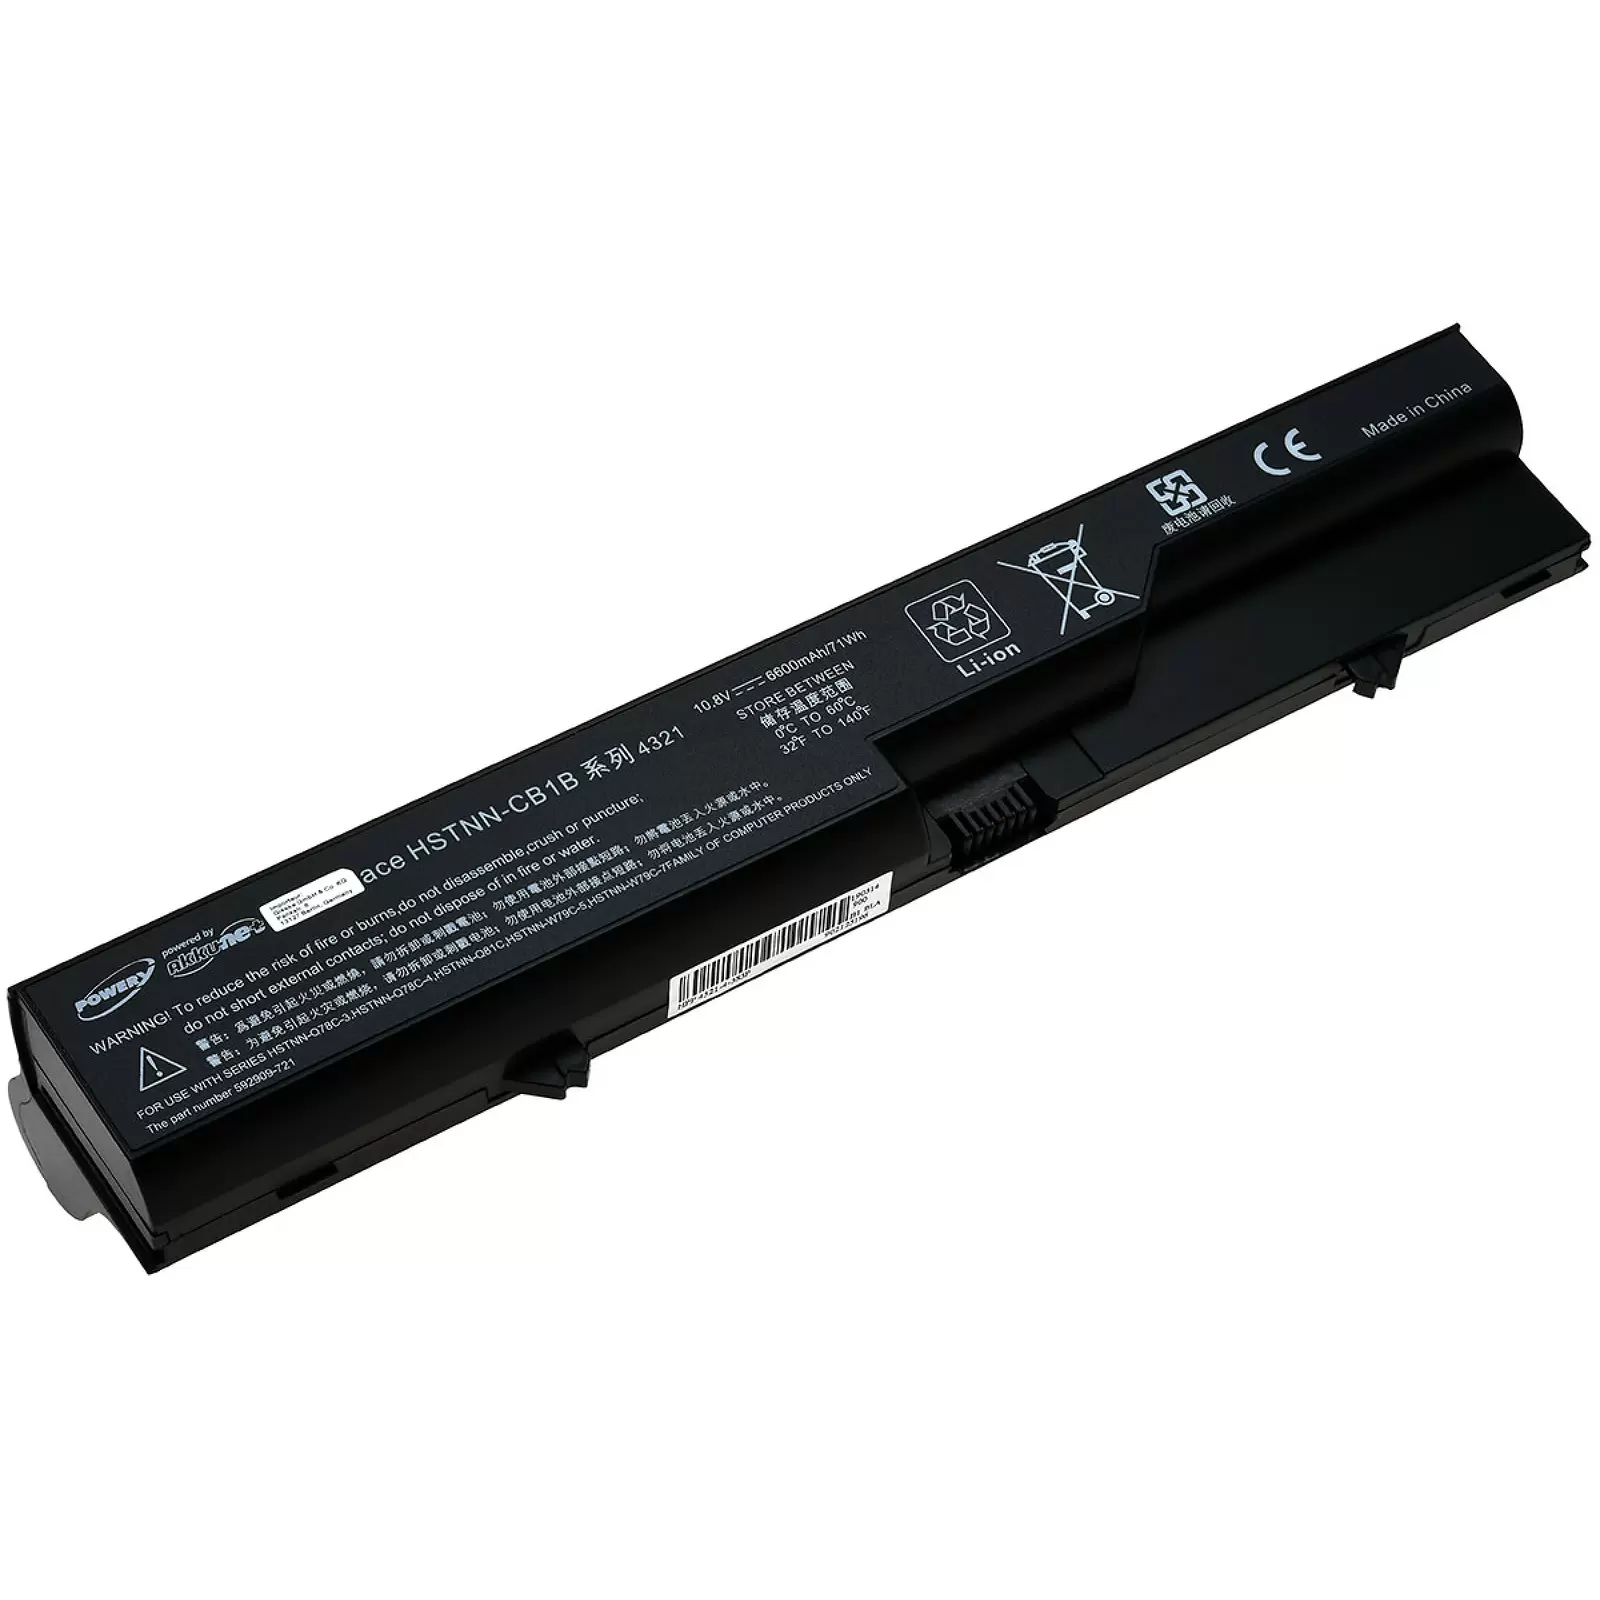 Powerakku für HP 420 / ProBook 4320s - 4520s / Typ HSTNN-LB1B